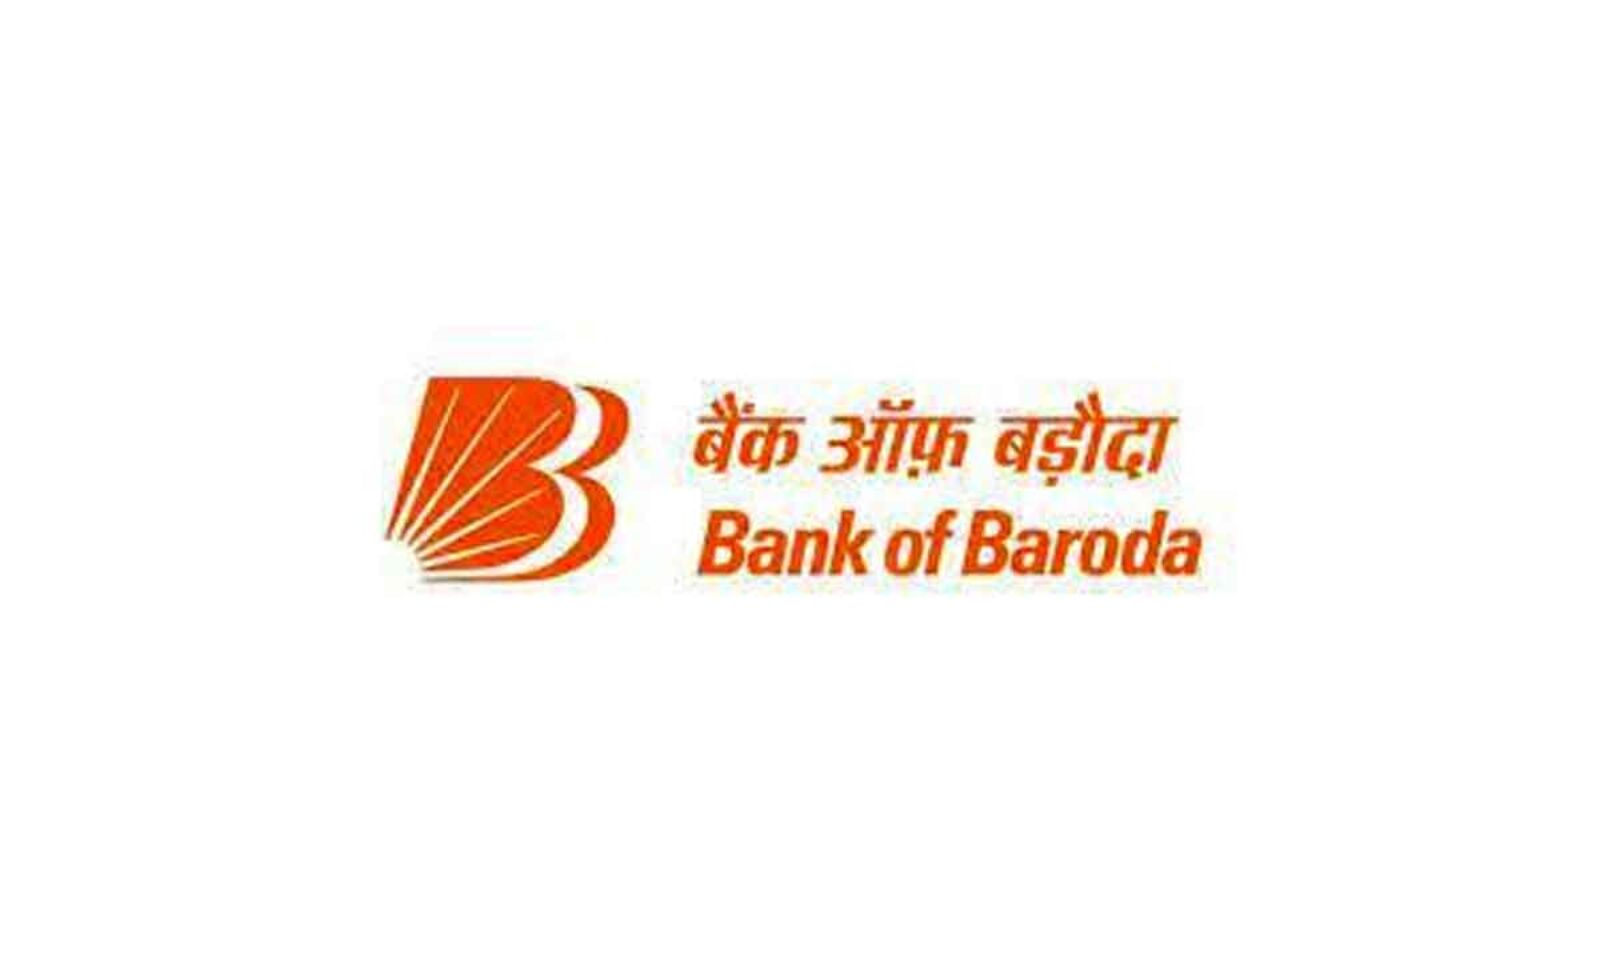 Baroda U.P. bank added a new photo. - Baroda U.P. bank